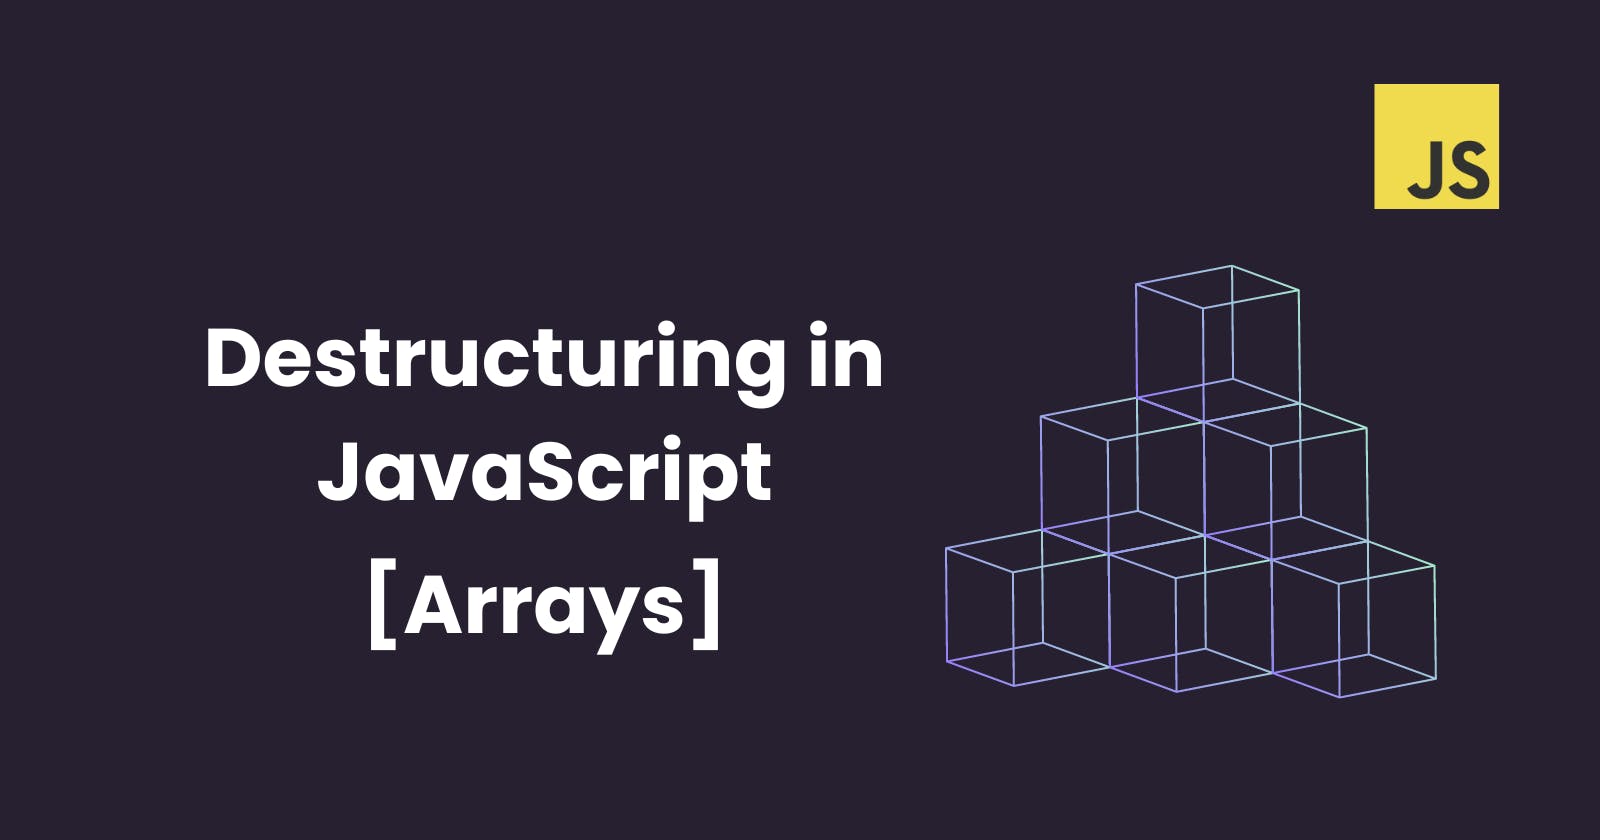 Destructuring in JavaScript: Part 1 - Arrays